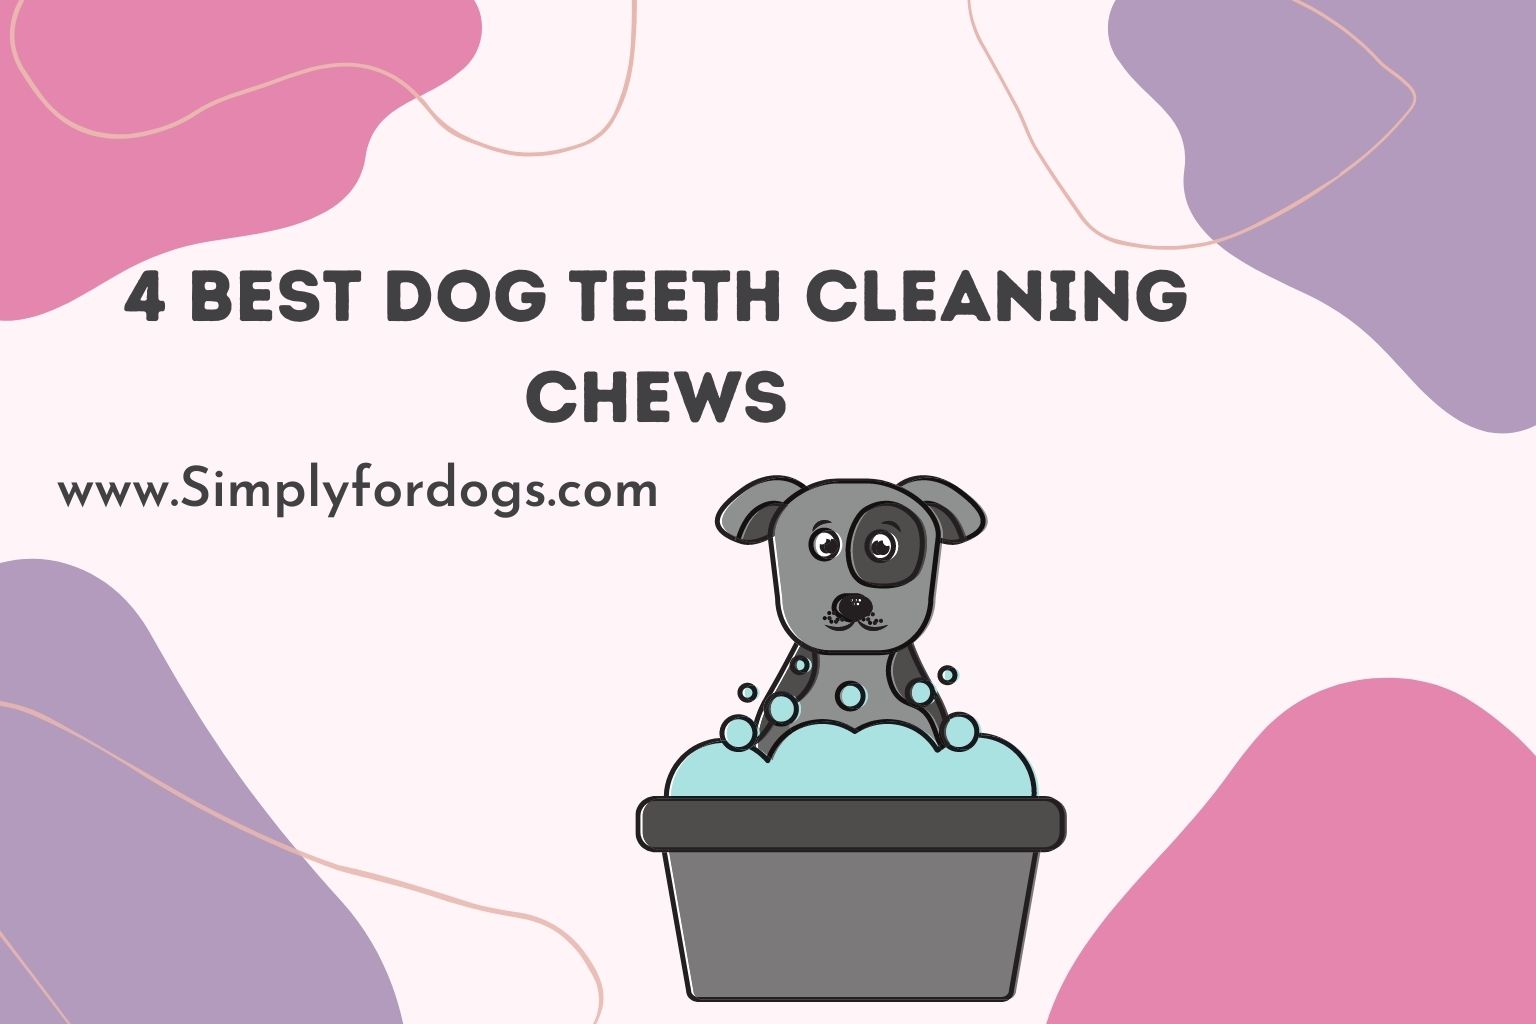 4-best-dog-teeth-cleaning-chews